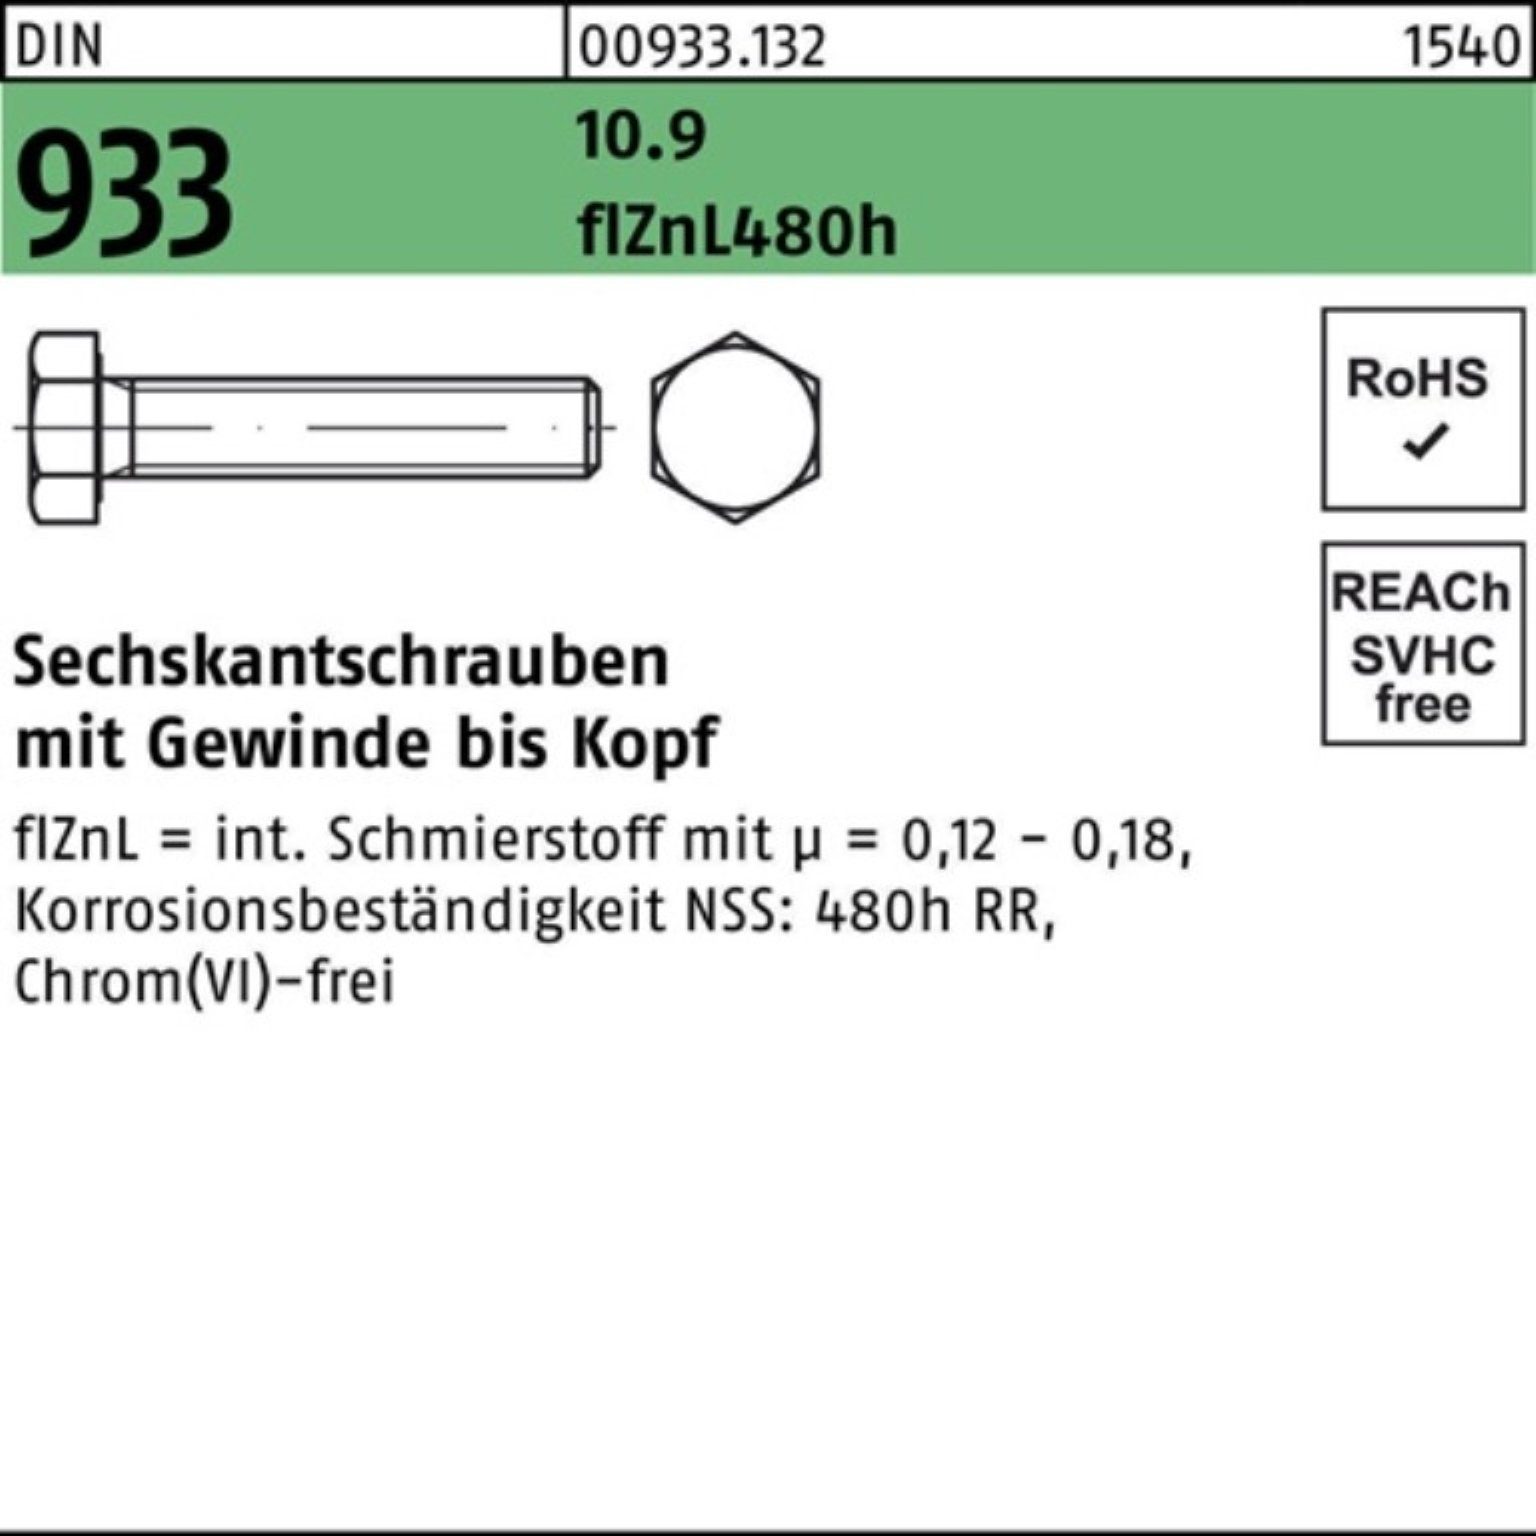 Reyher Sechskantschraube M24x DIN flZnL/nc/x/x/480 VG 100 100er Pack Sechskantschraube 10.9 933